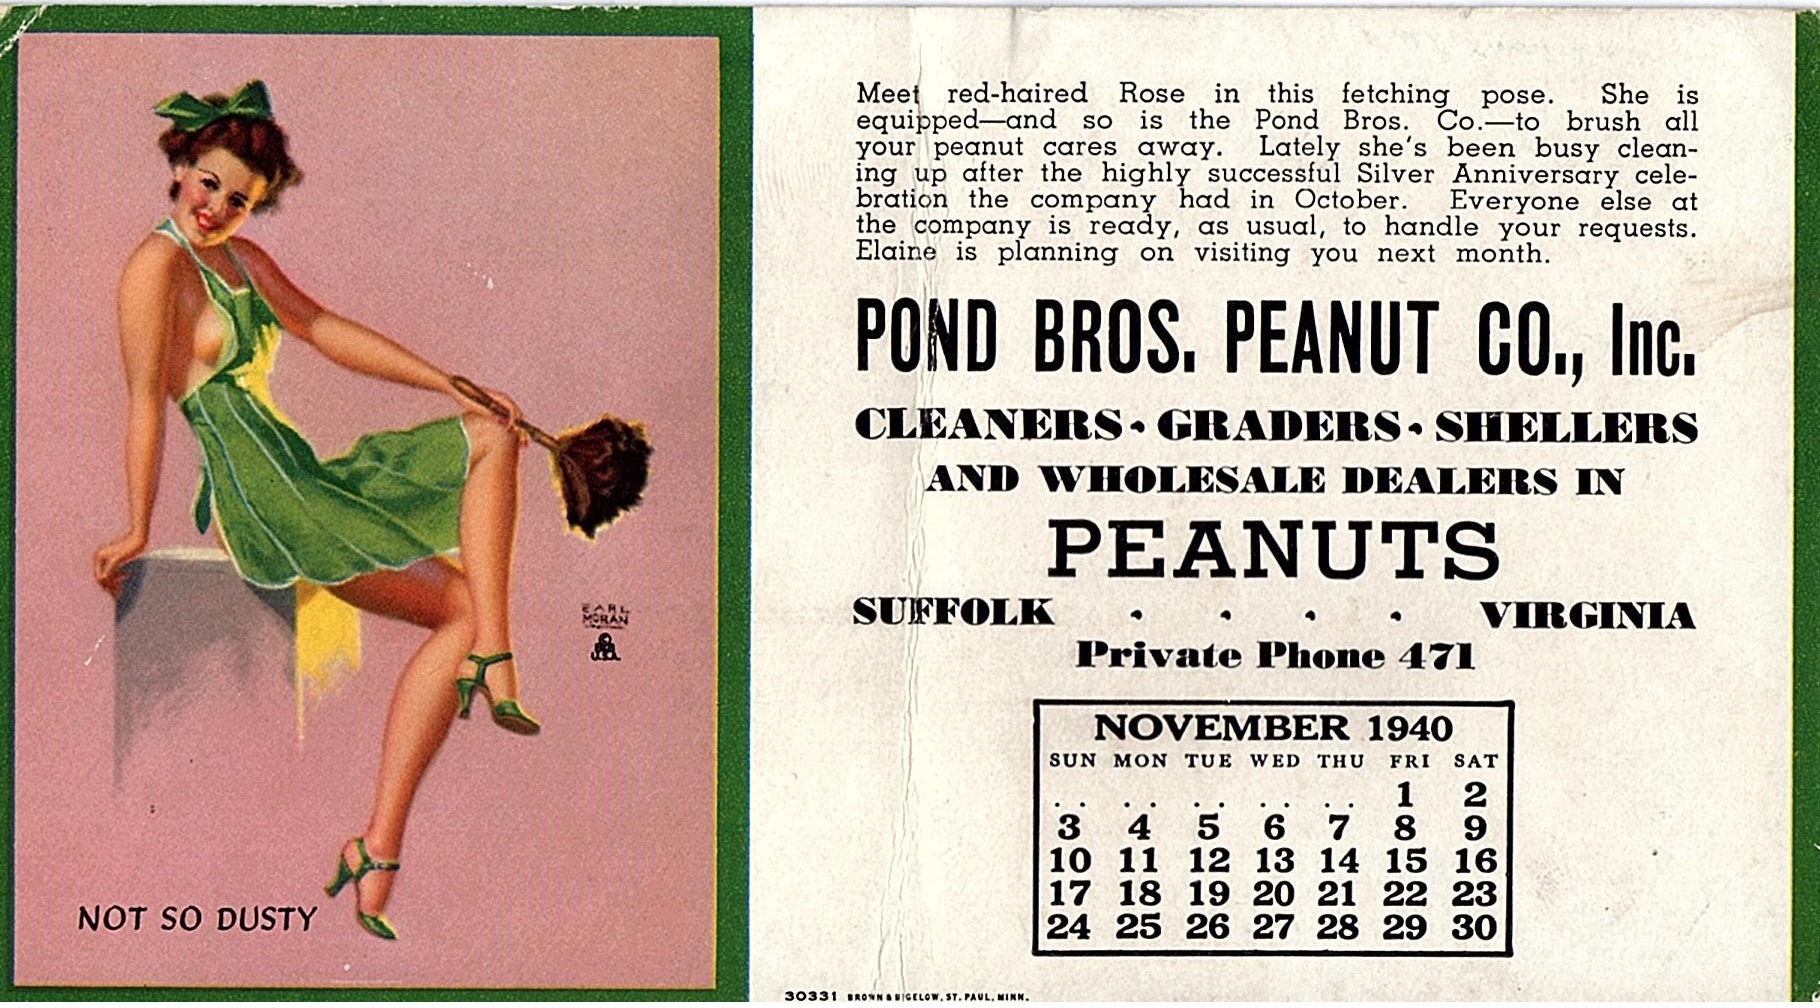 Pond Brothers Peanut Company, Nov. 1940